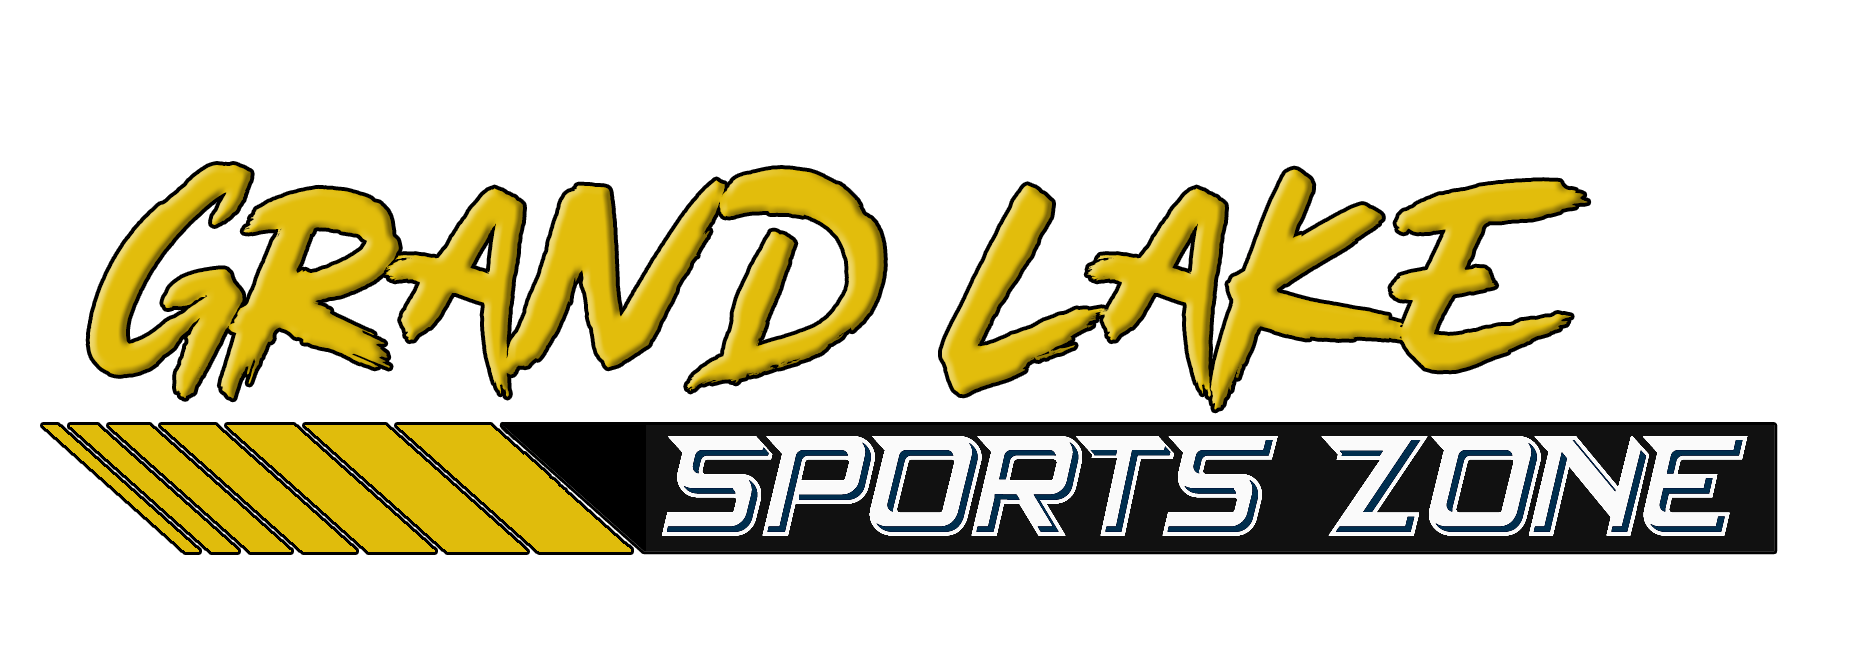 Grand Lakes Sports Zone